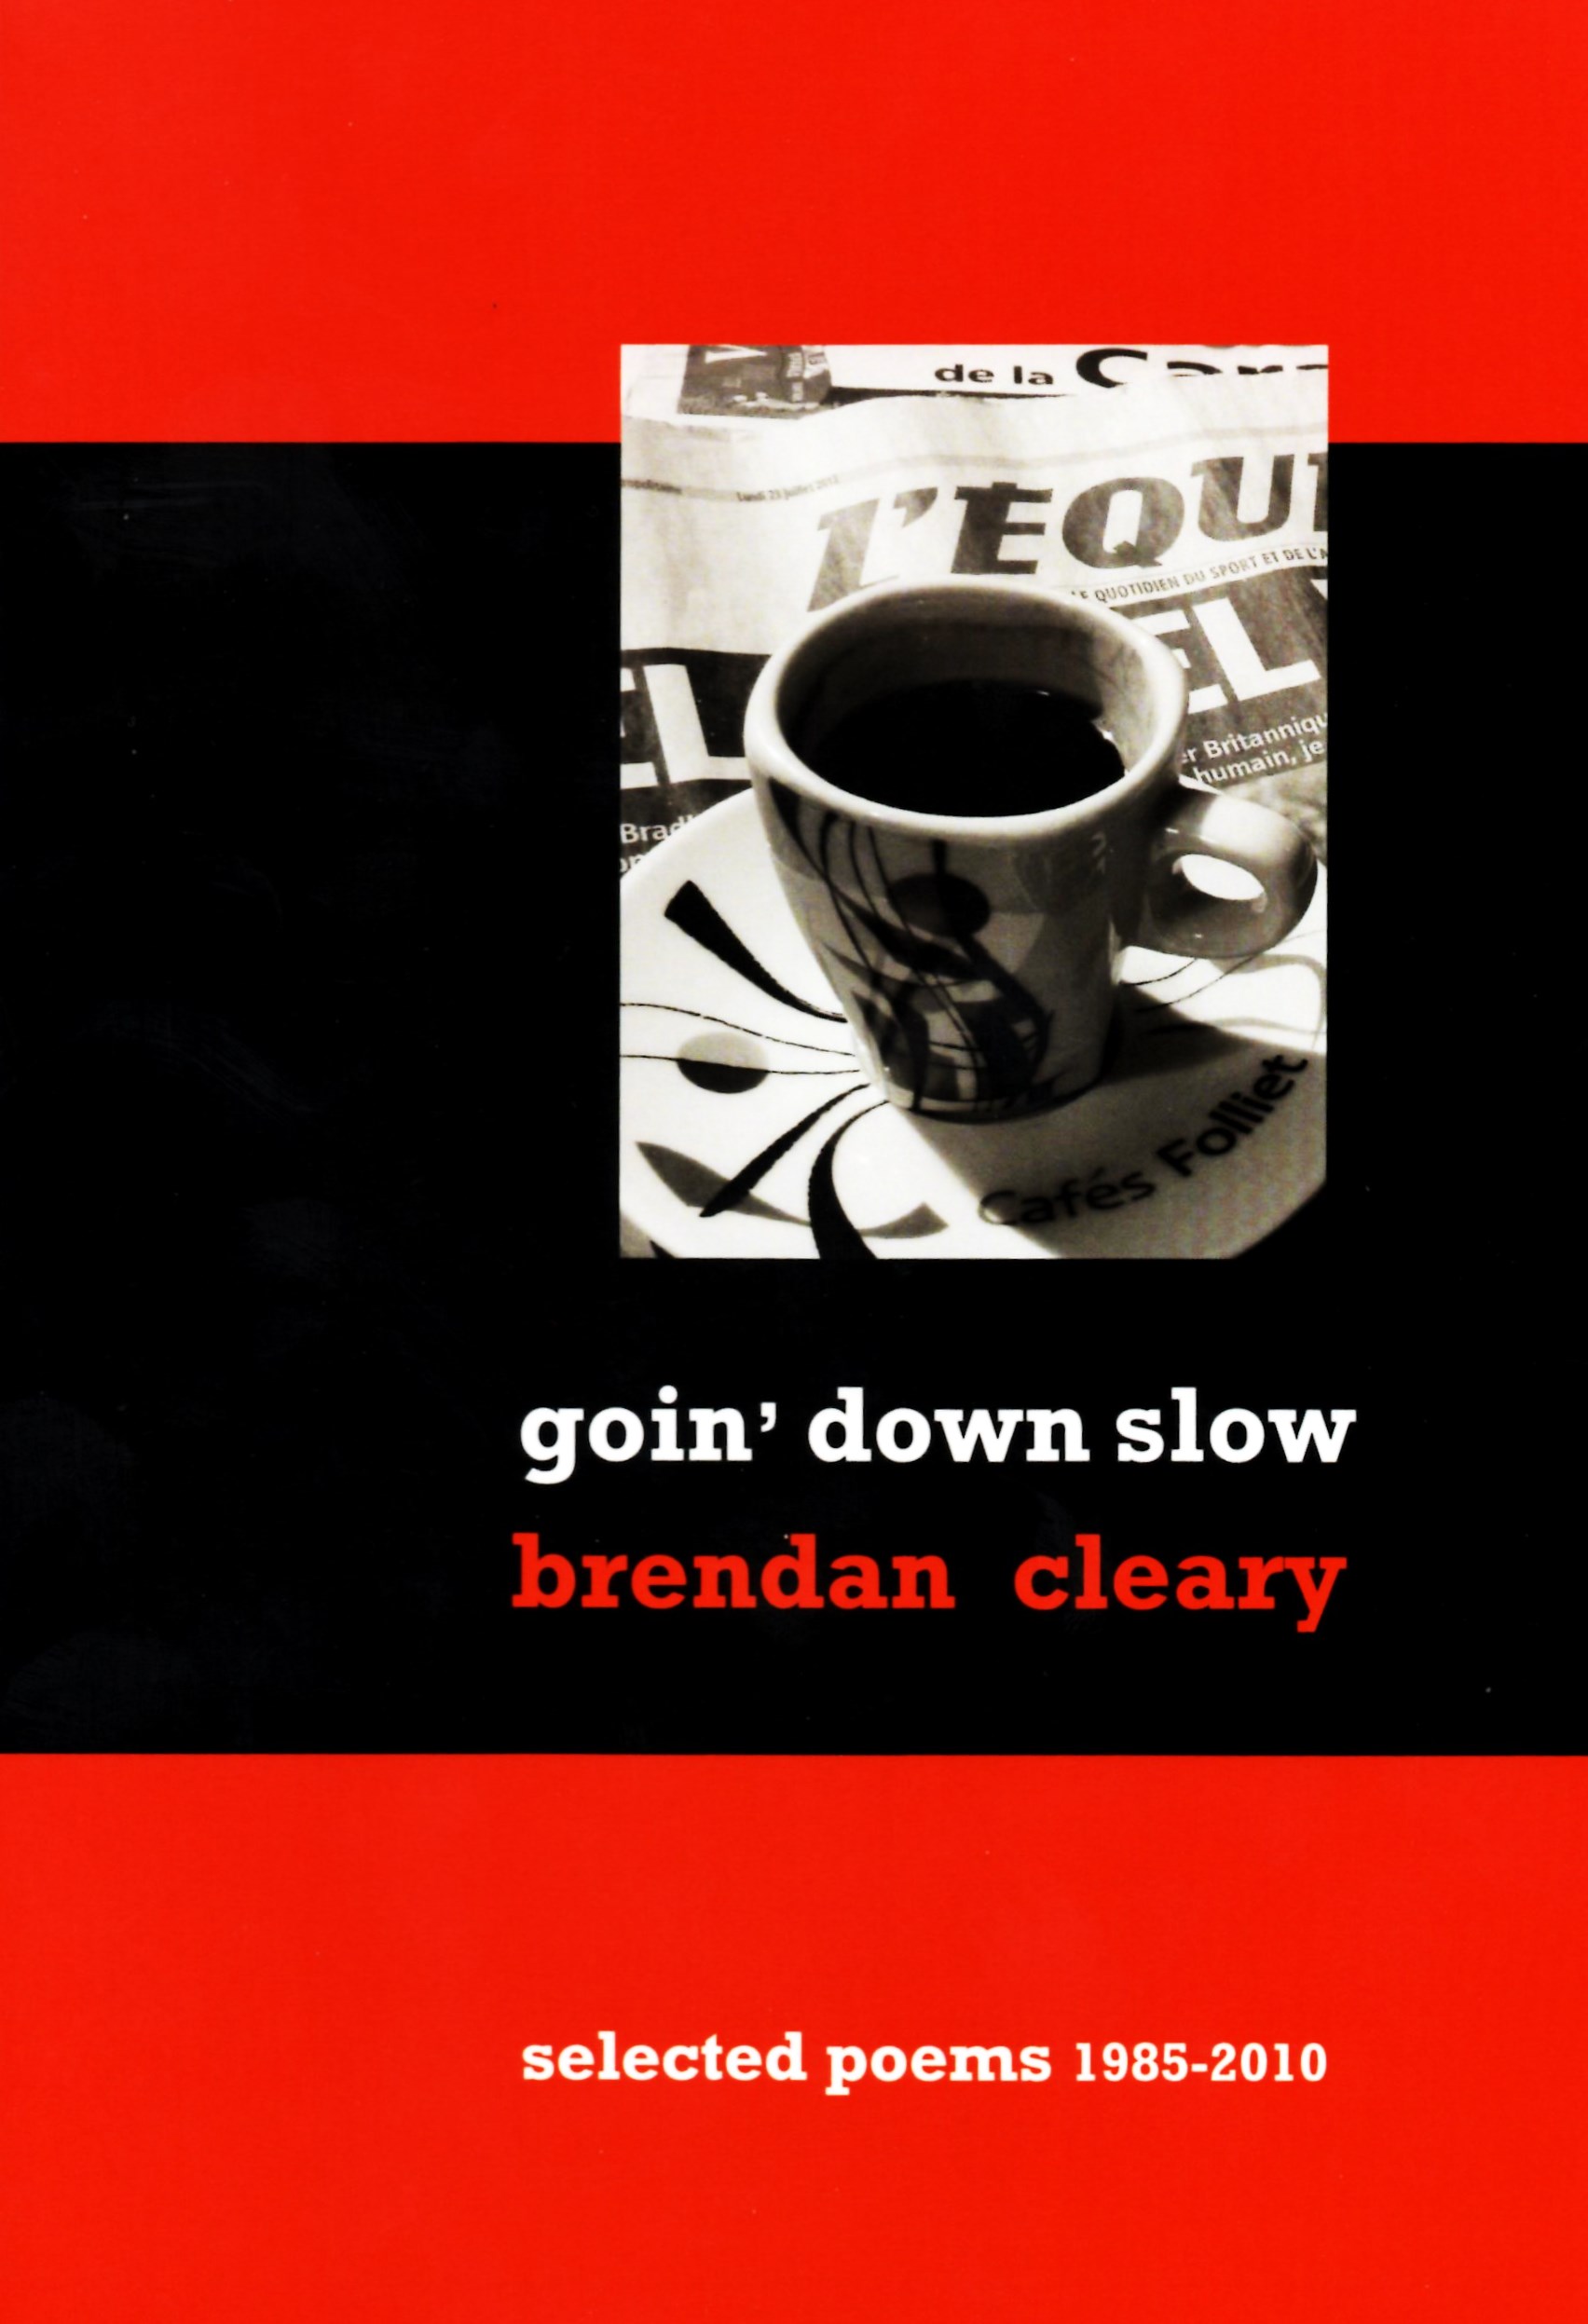 Brendan Cleary Goin' Down Slow